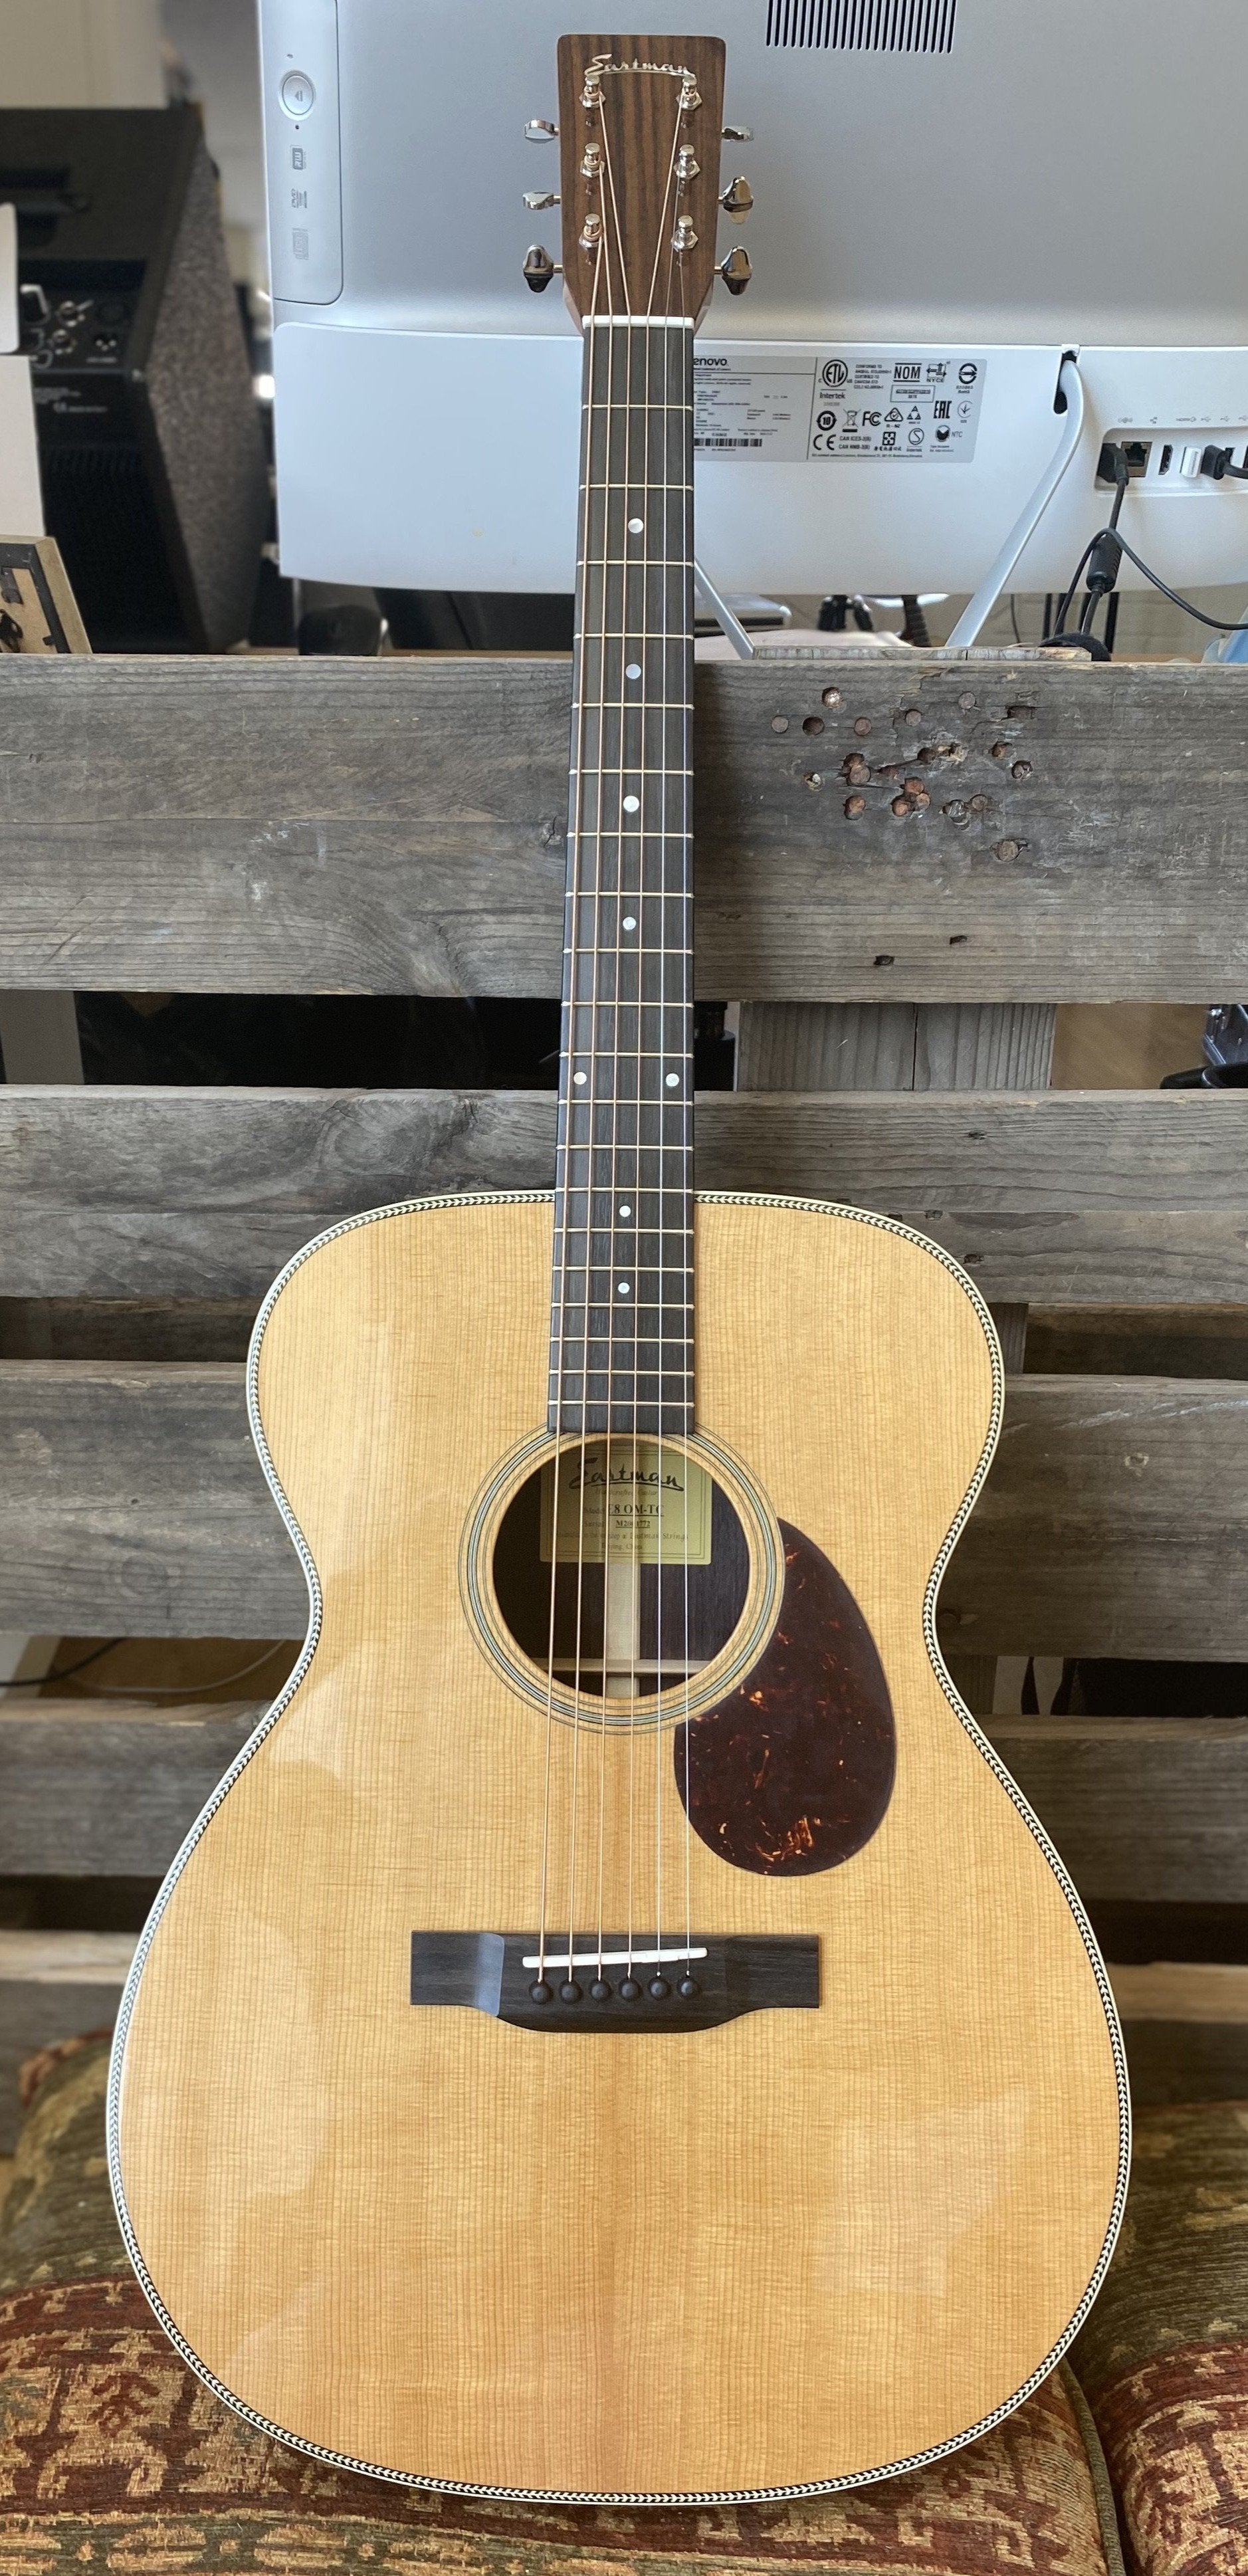 Eastman E8OML TC Left Handed OM, Acoustic Guitar for sale at Richards Guitars.